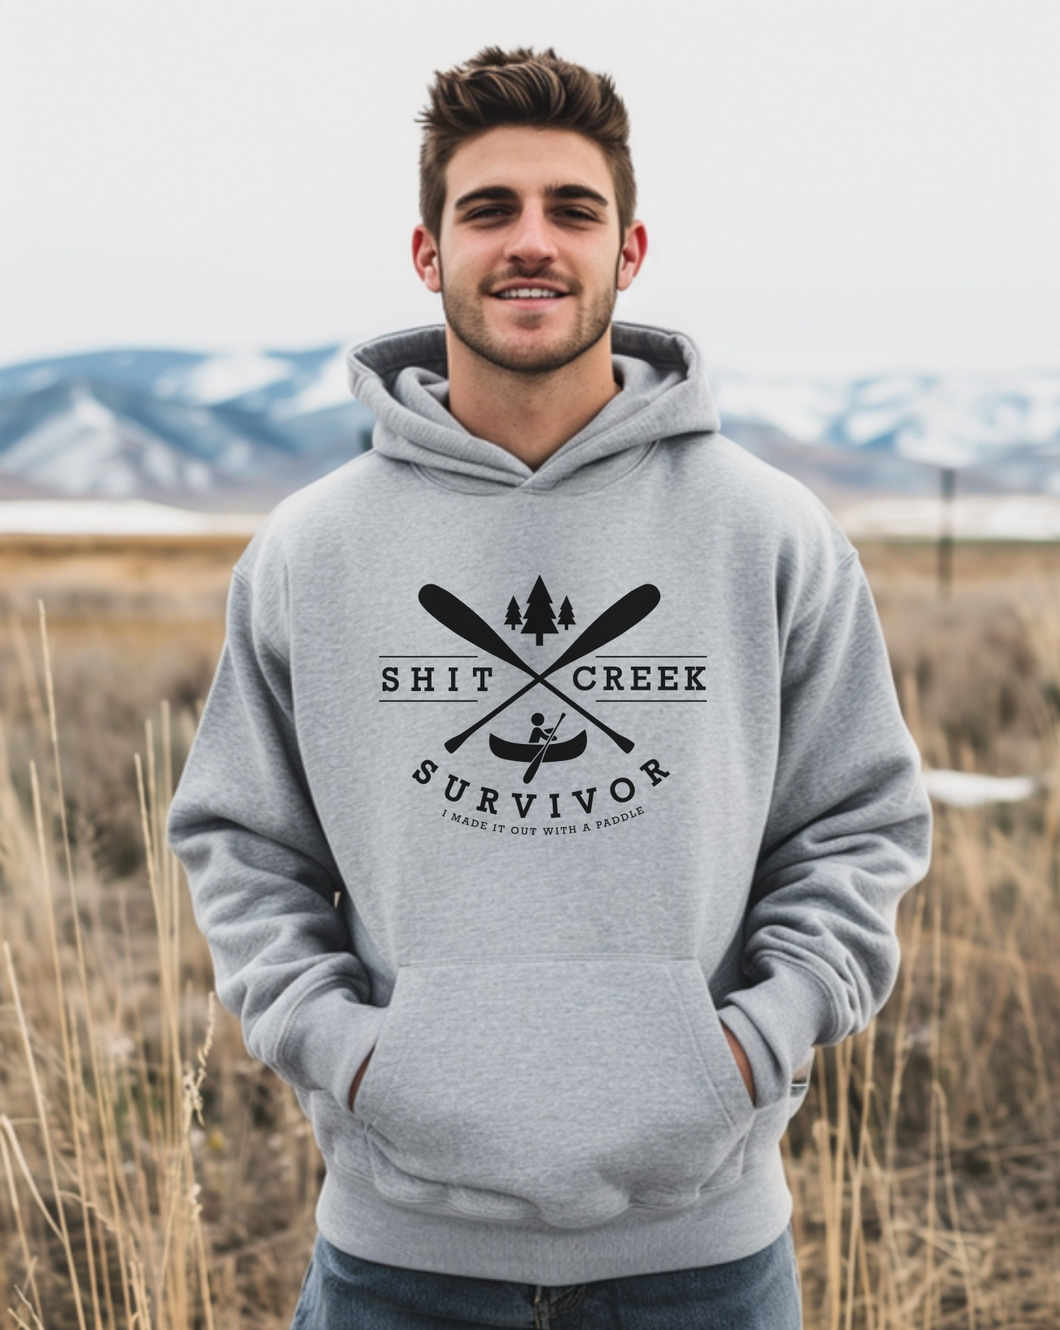 Creek survivor hoodie sweatshirt